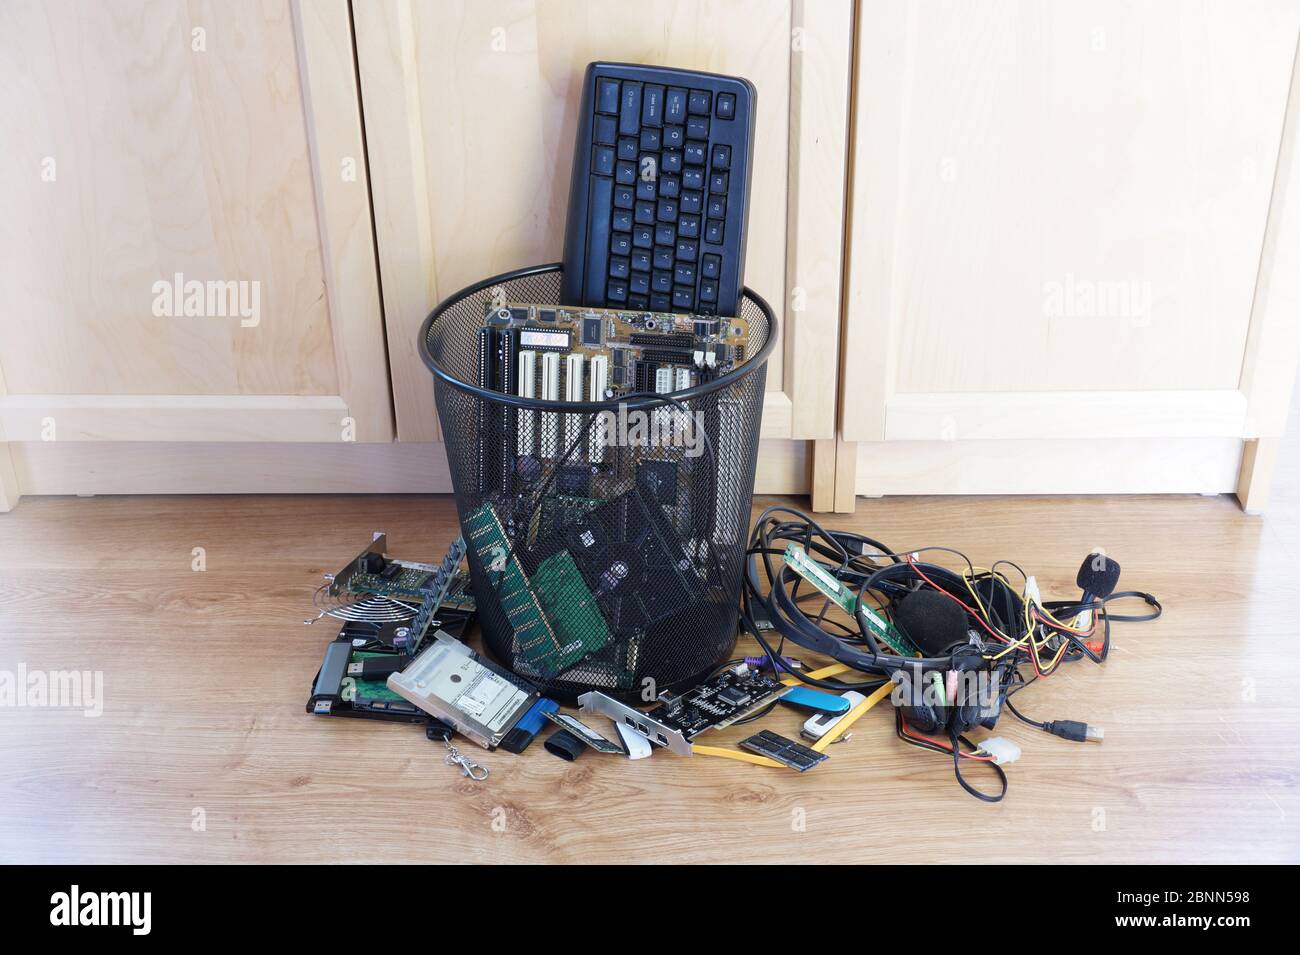 Un contenedor de basura lleno de componentes de computadora gastados. E chatarra. Foto de stock